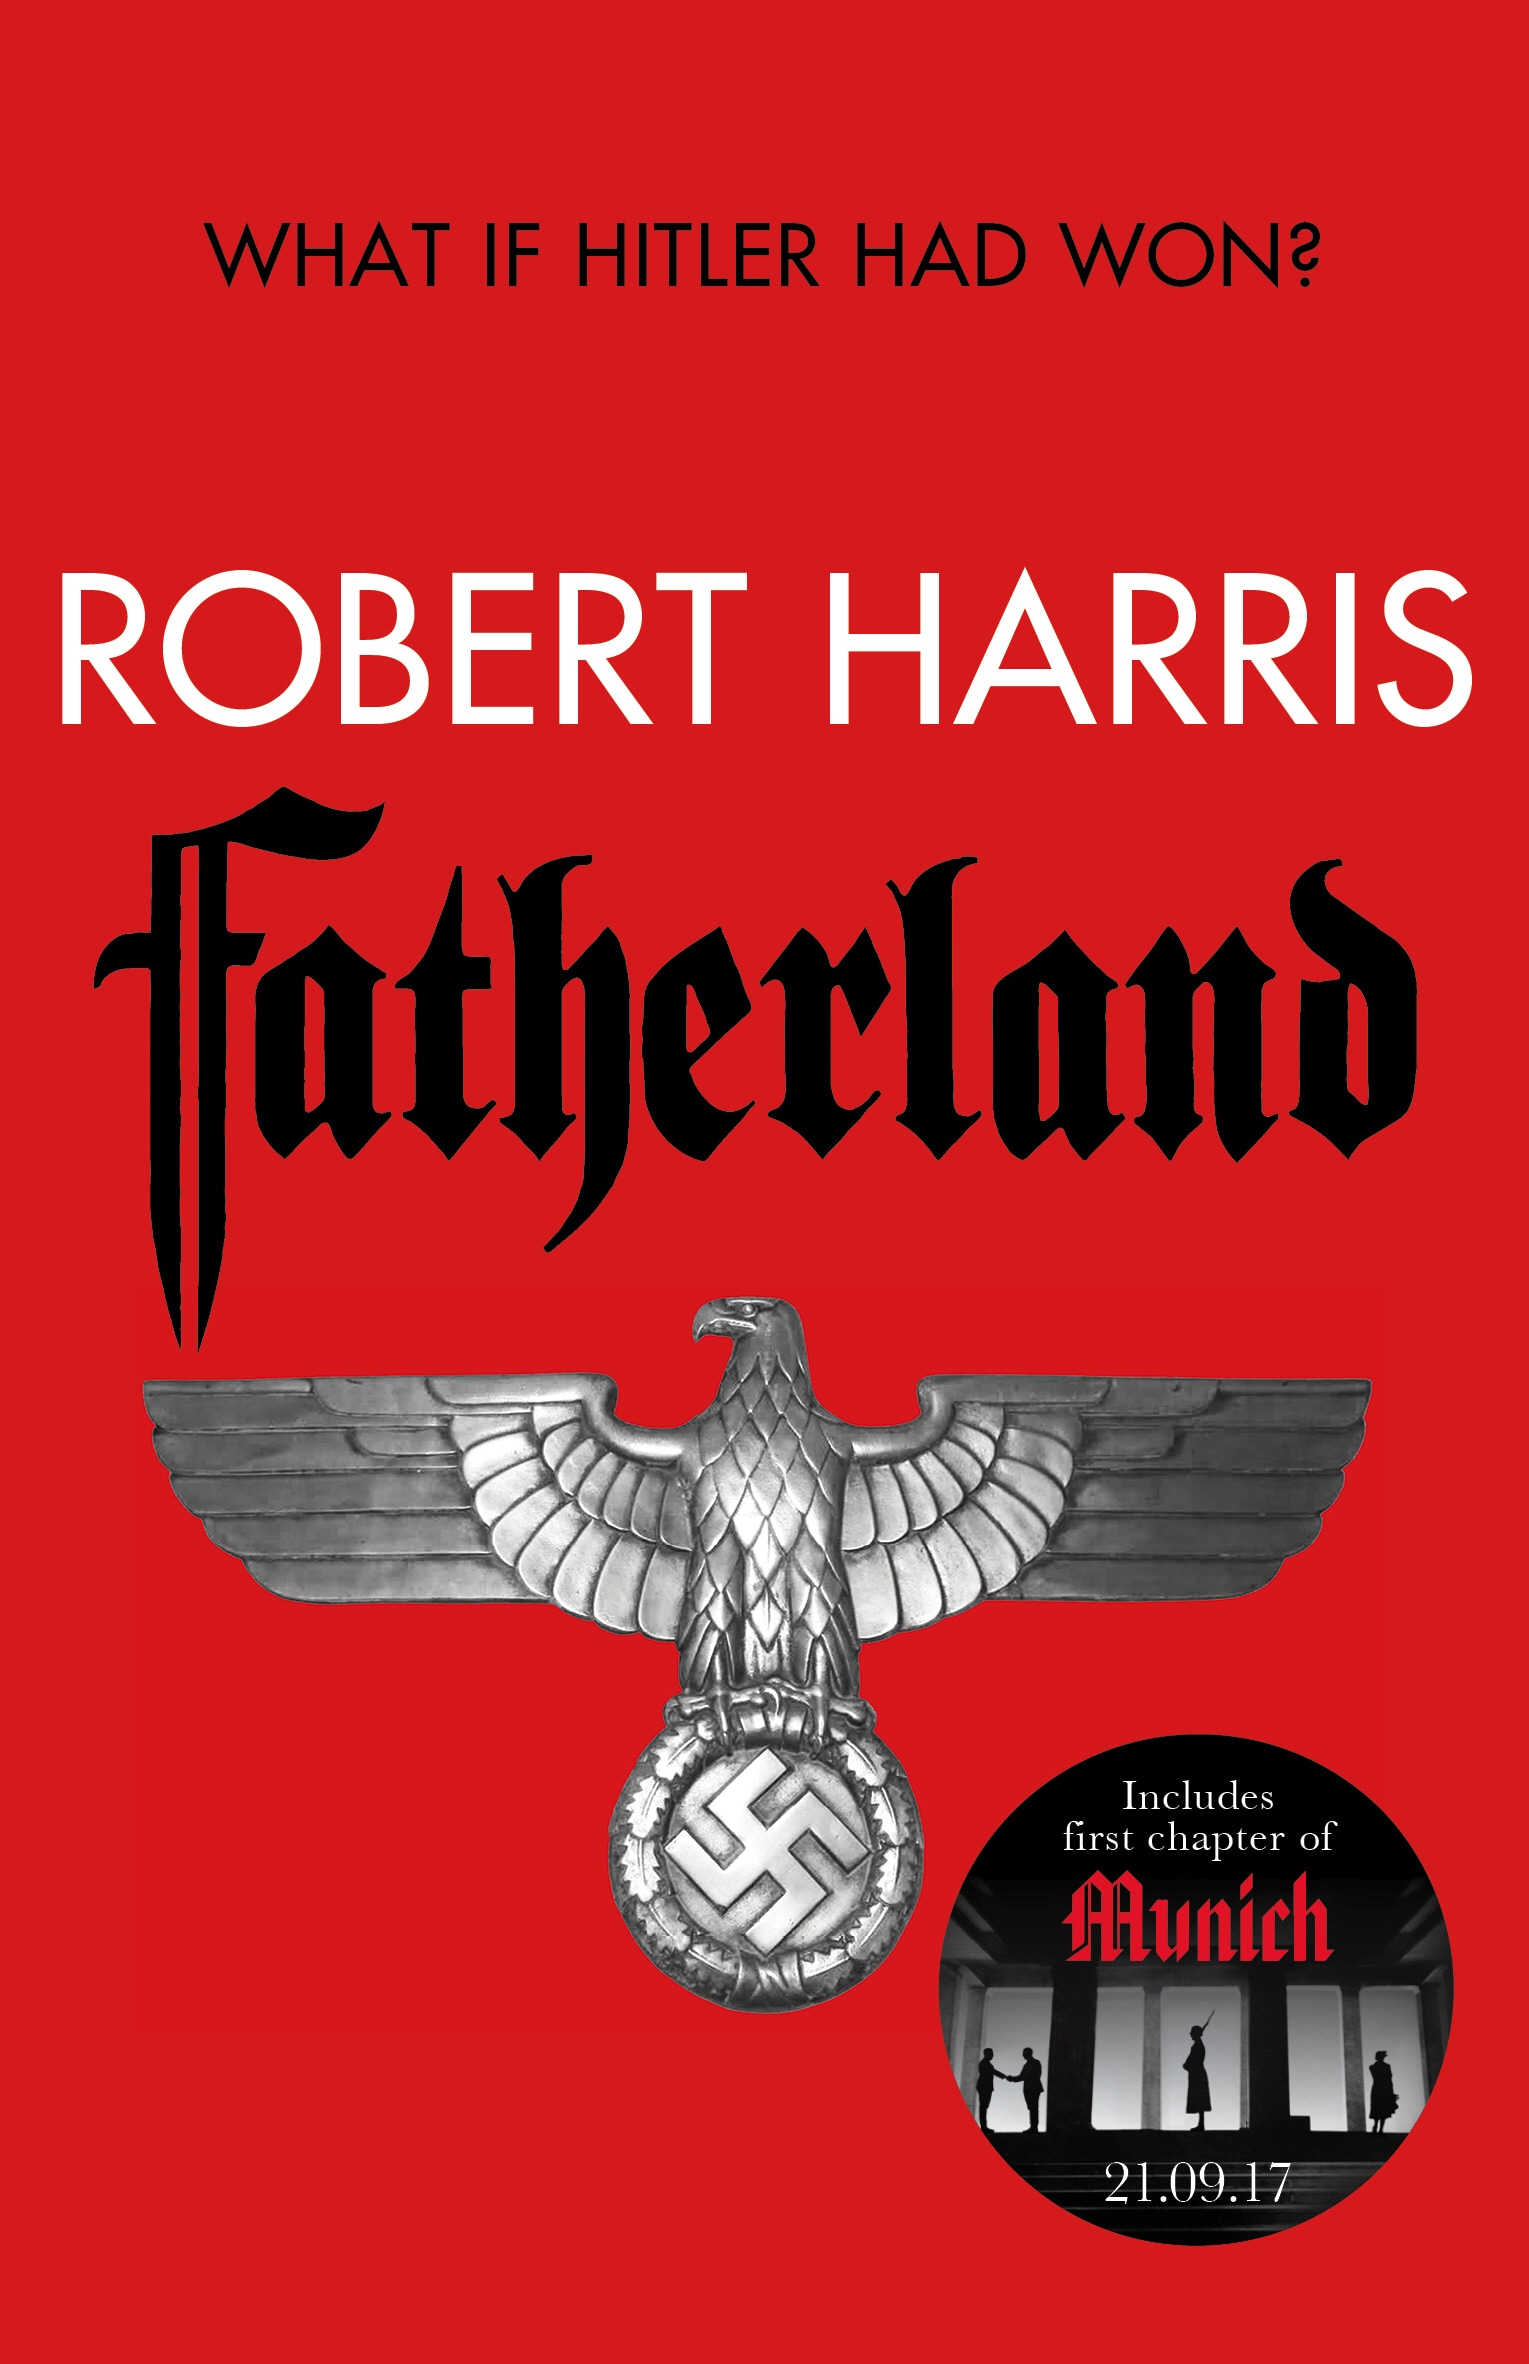 Book “Fatherland” by Robert Harris — August 10, 2017